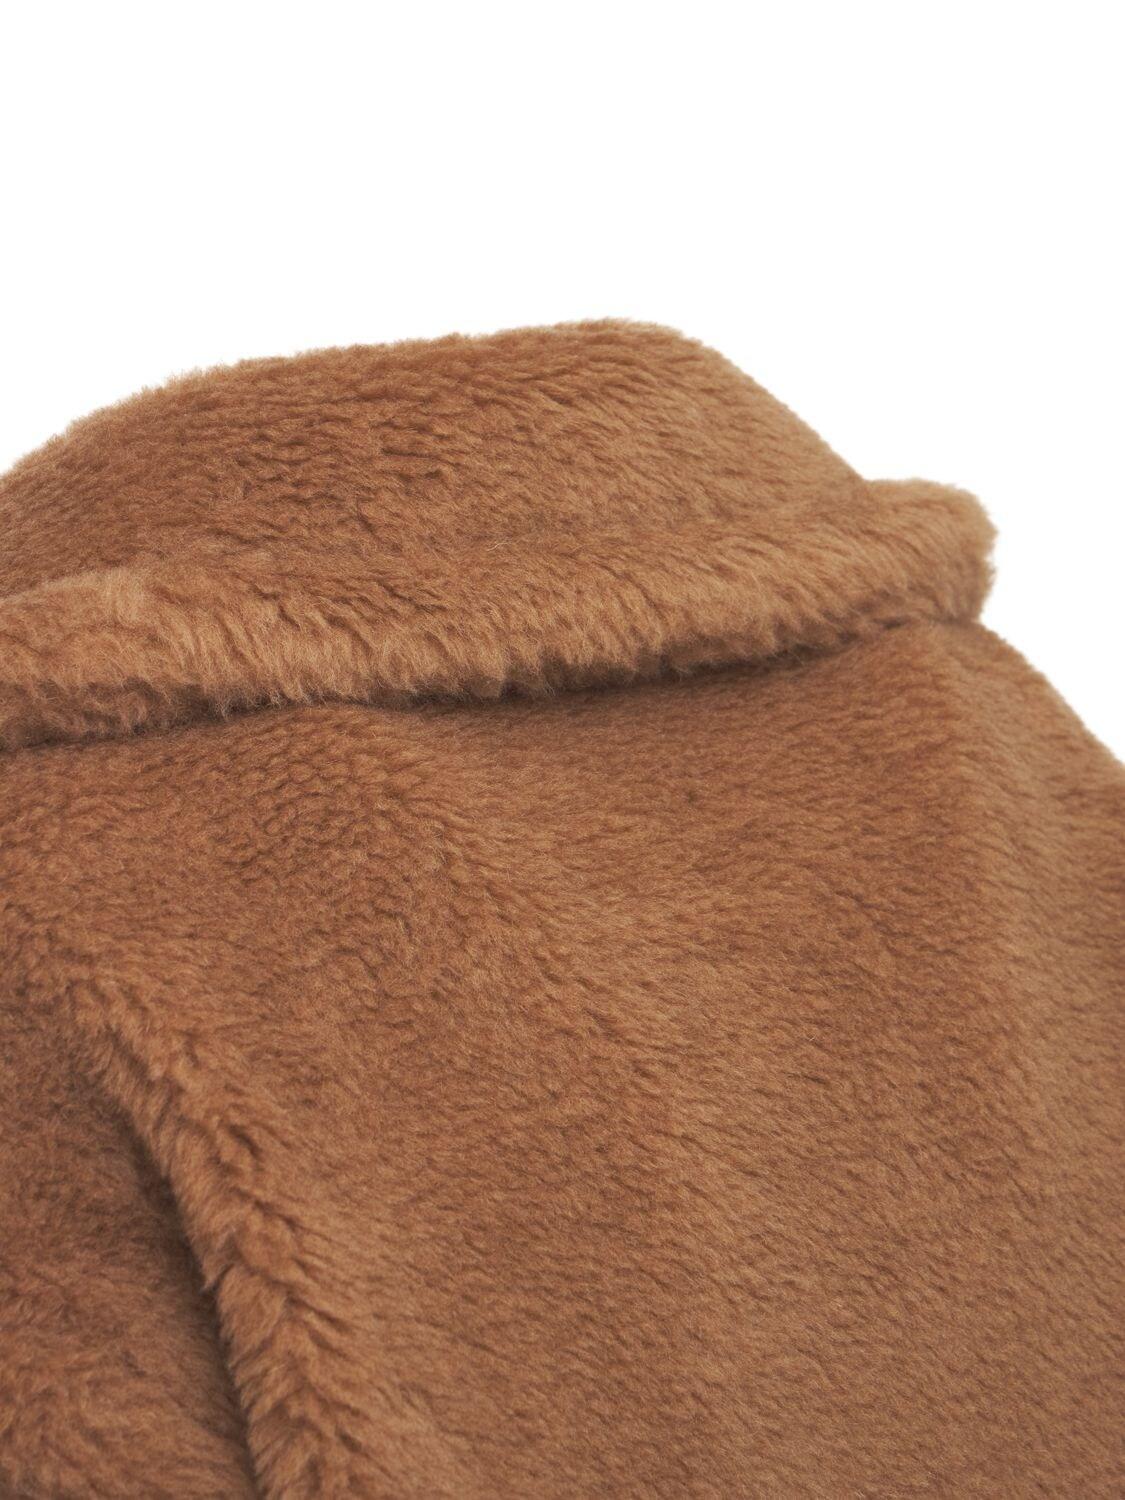 Teddy bear icon coat Max Mara Camel size S International in Fur - 29796178